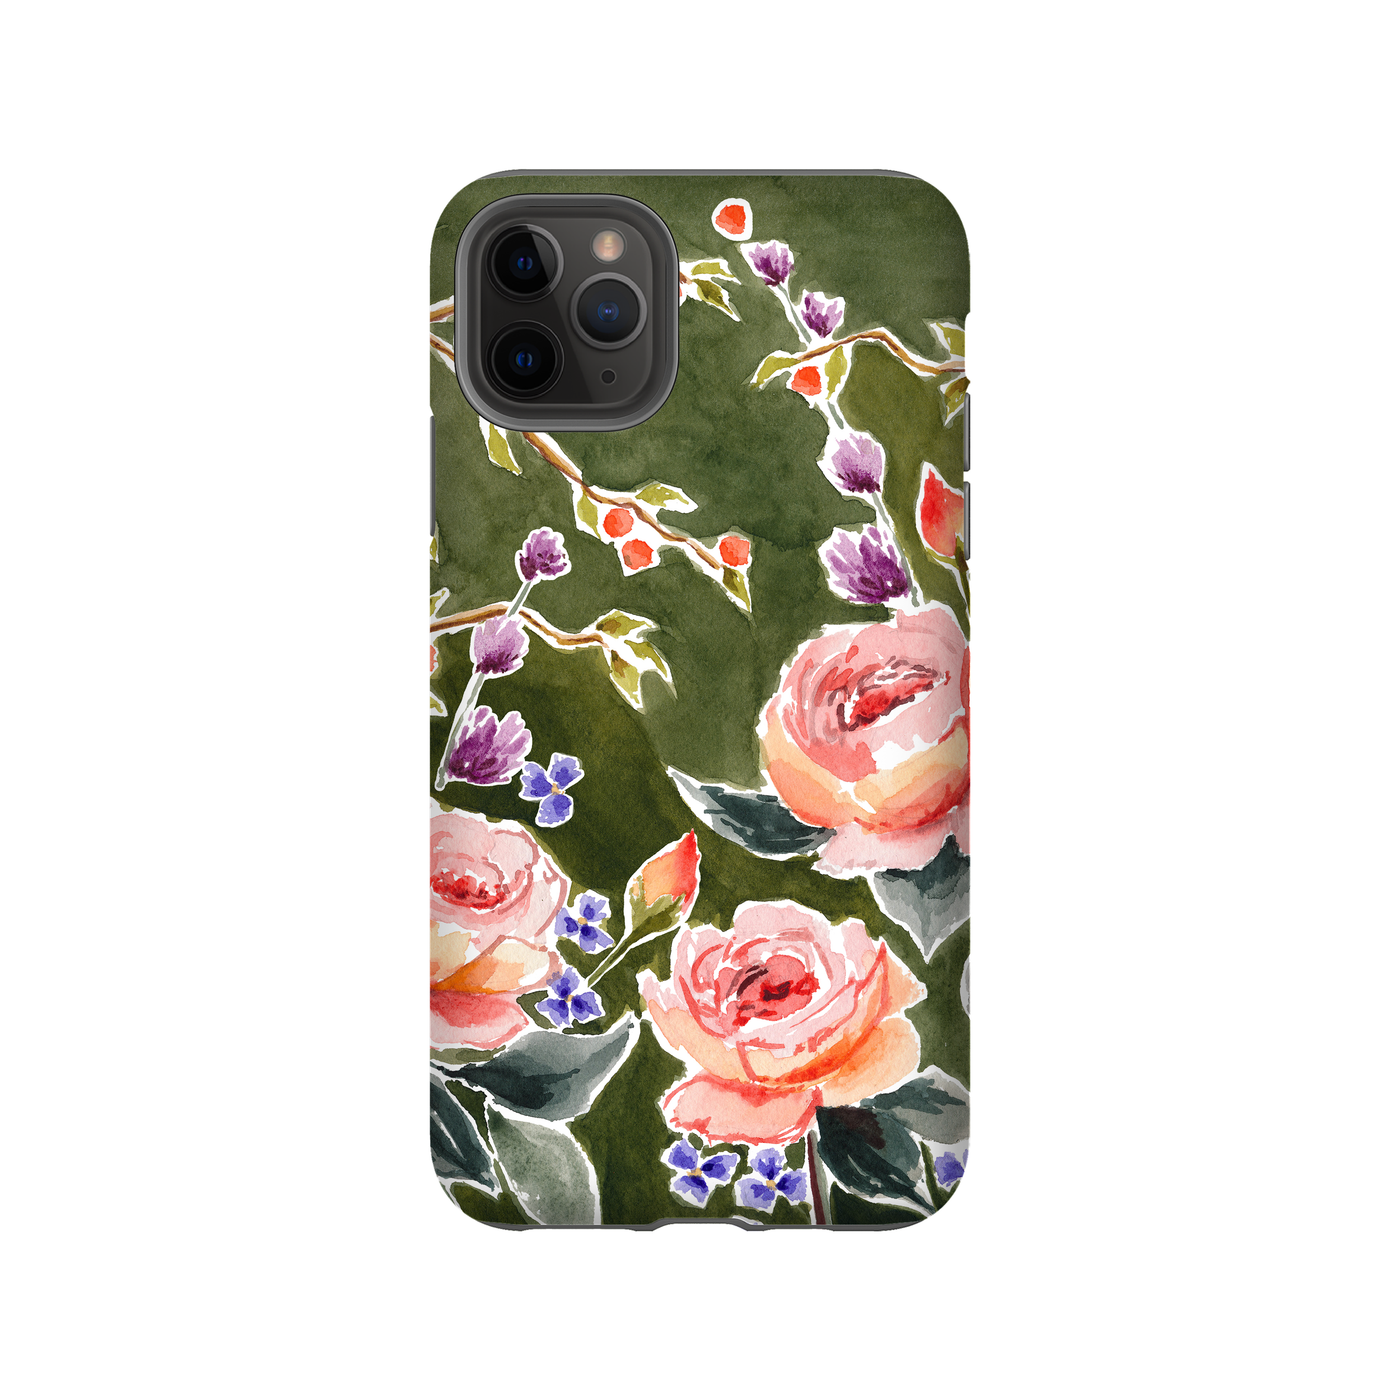 iPhone case in garden roses